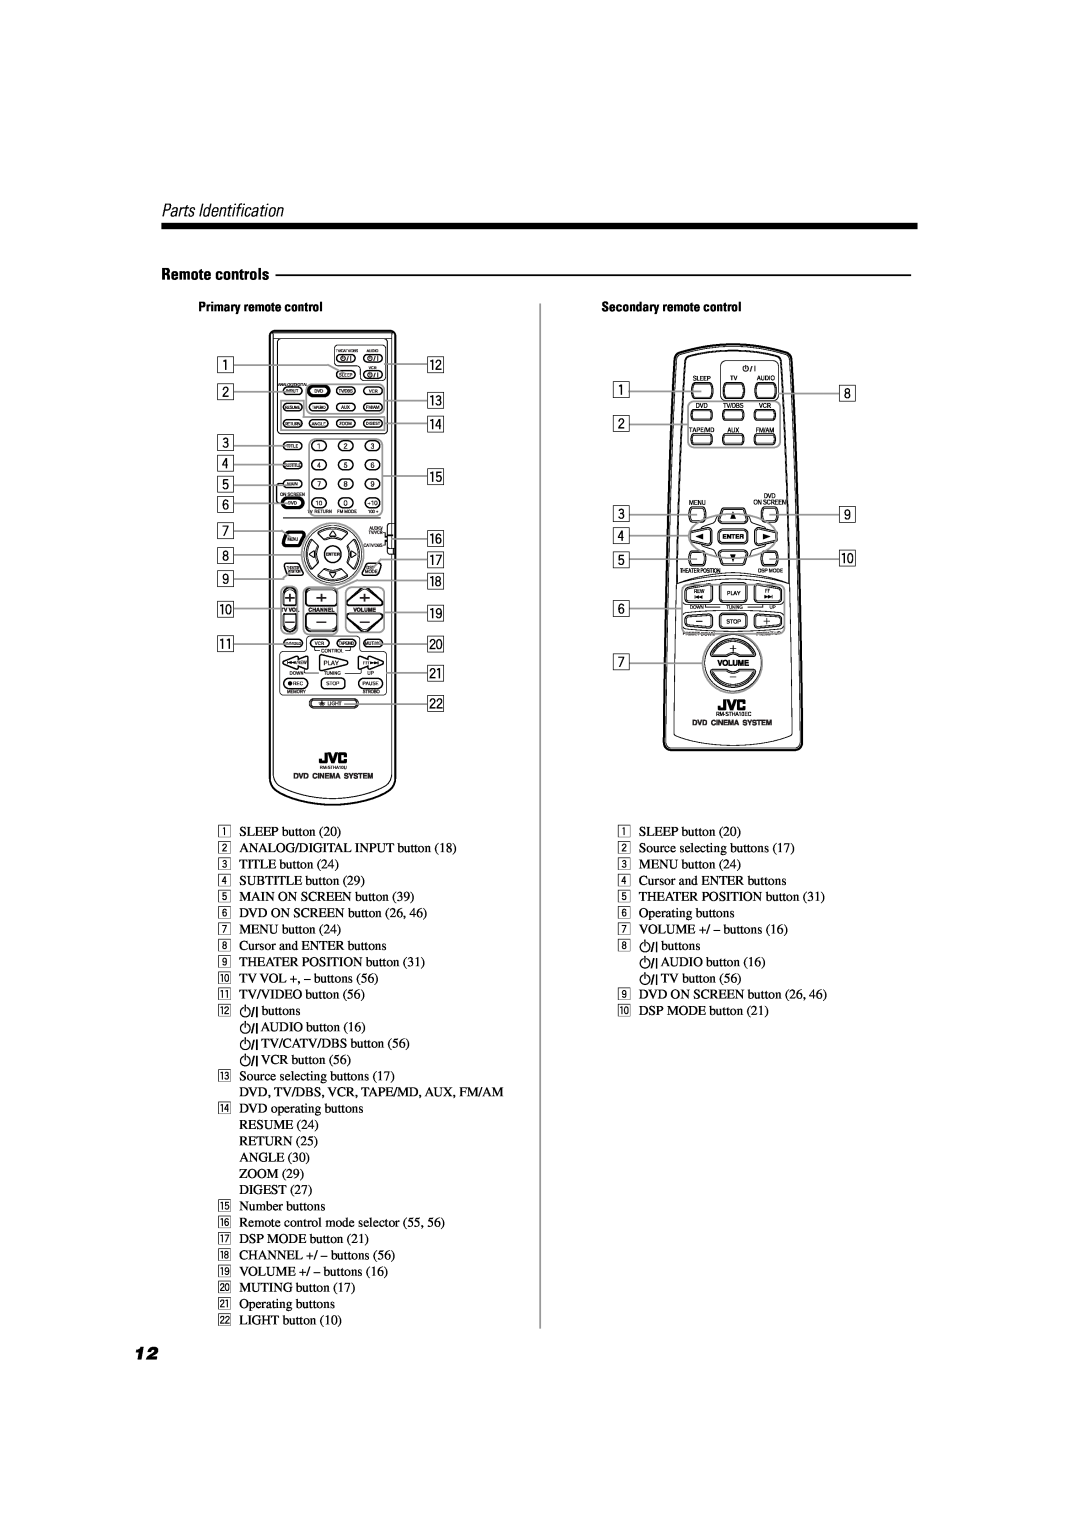 JVC TH-A104 manual Parts Identification, 1w 2e r 3 4 5t 6 7y 8u 9i po q a s, 18 2 39 5p, Primary remote control 